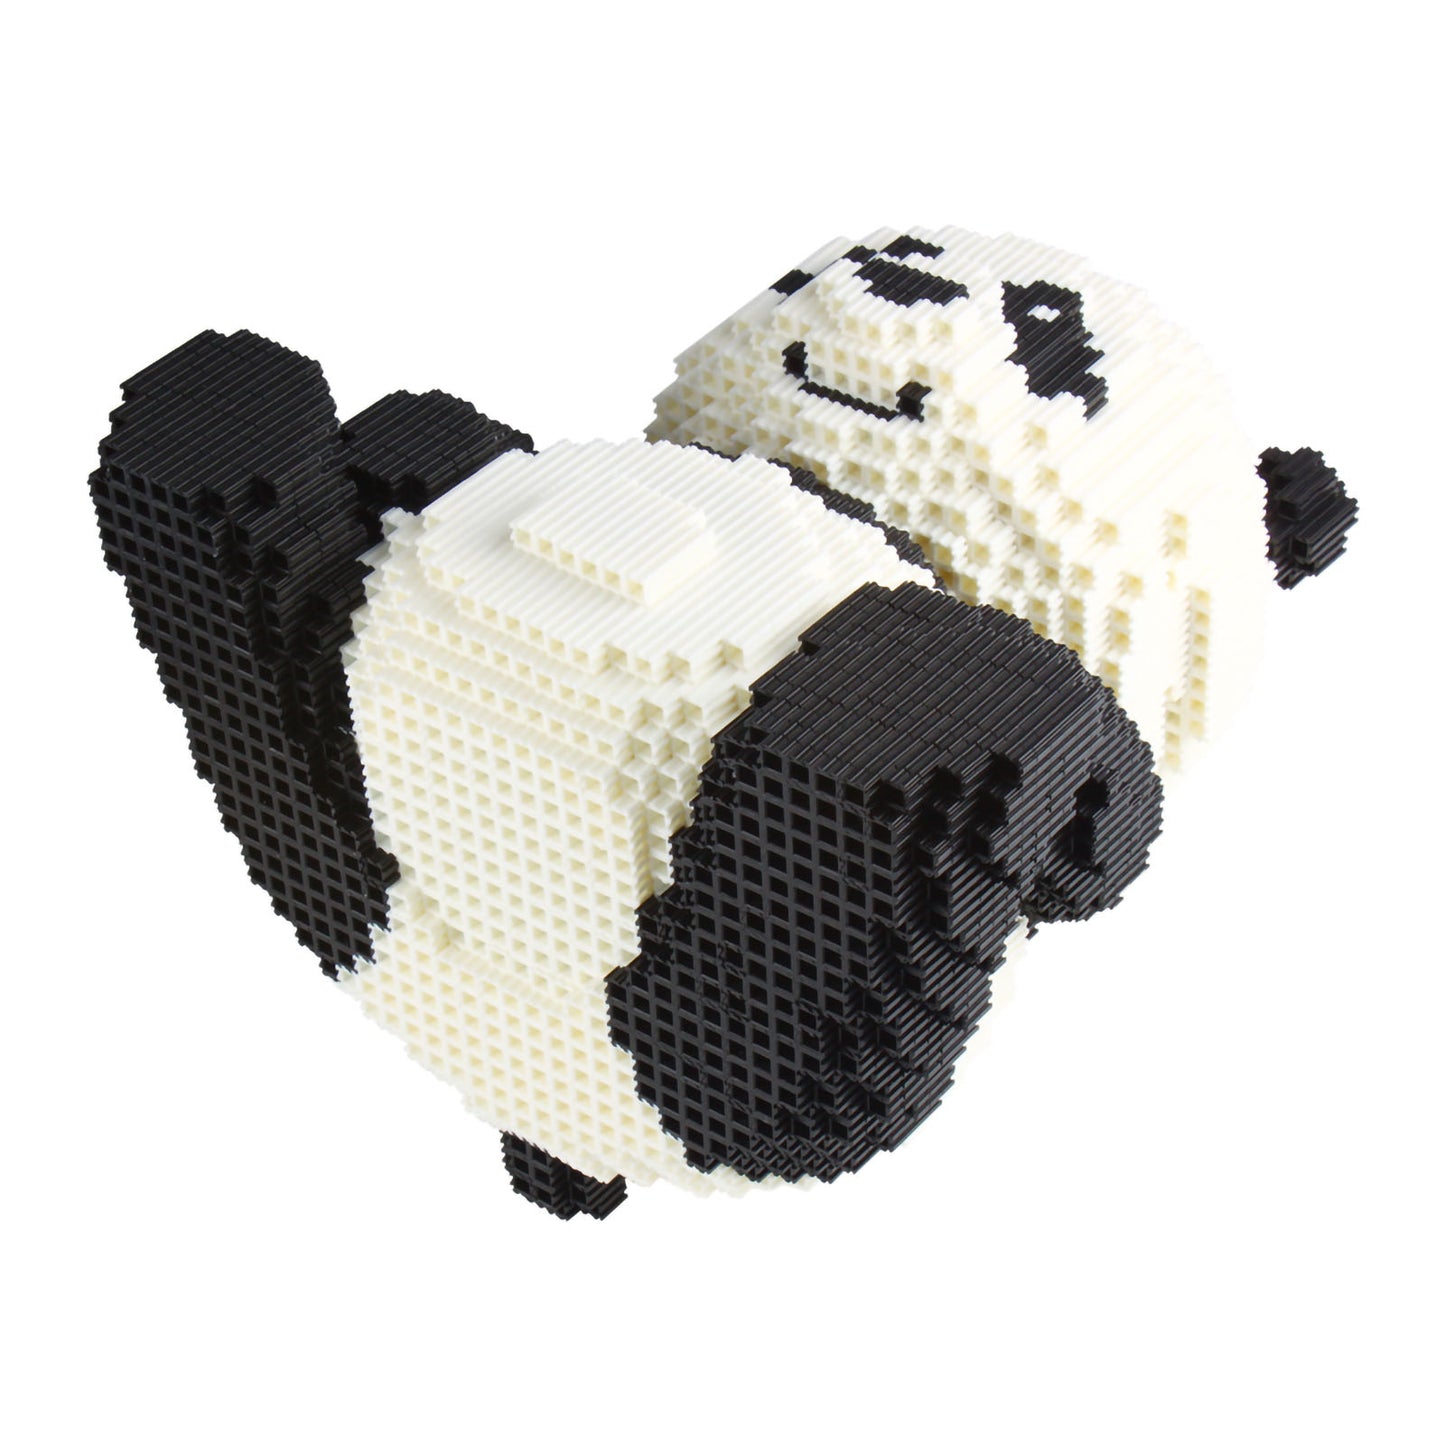 Larcele Panda Building Toy Bricks, 7812 Pieces KLJM-02(Model 2843)